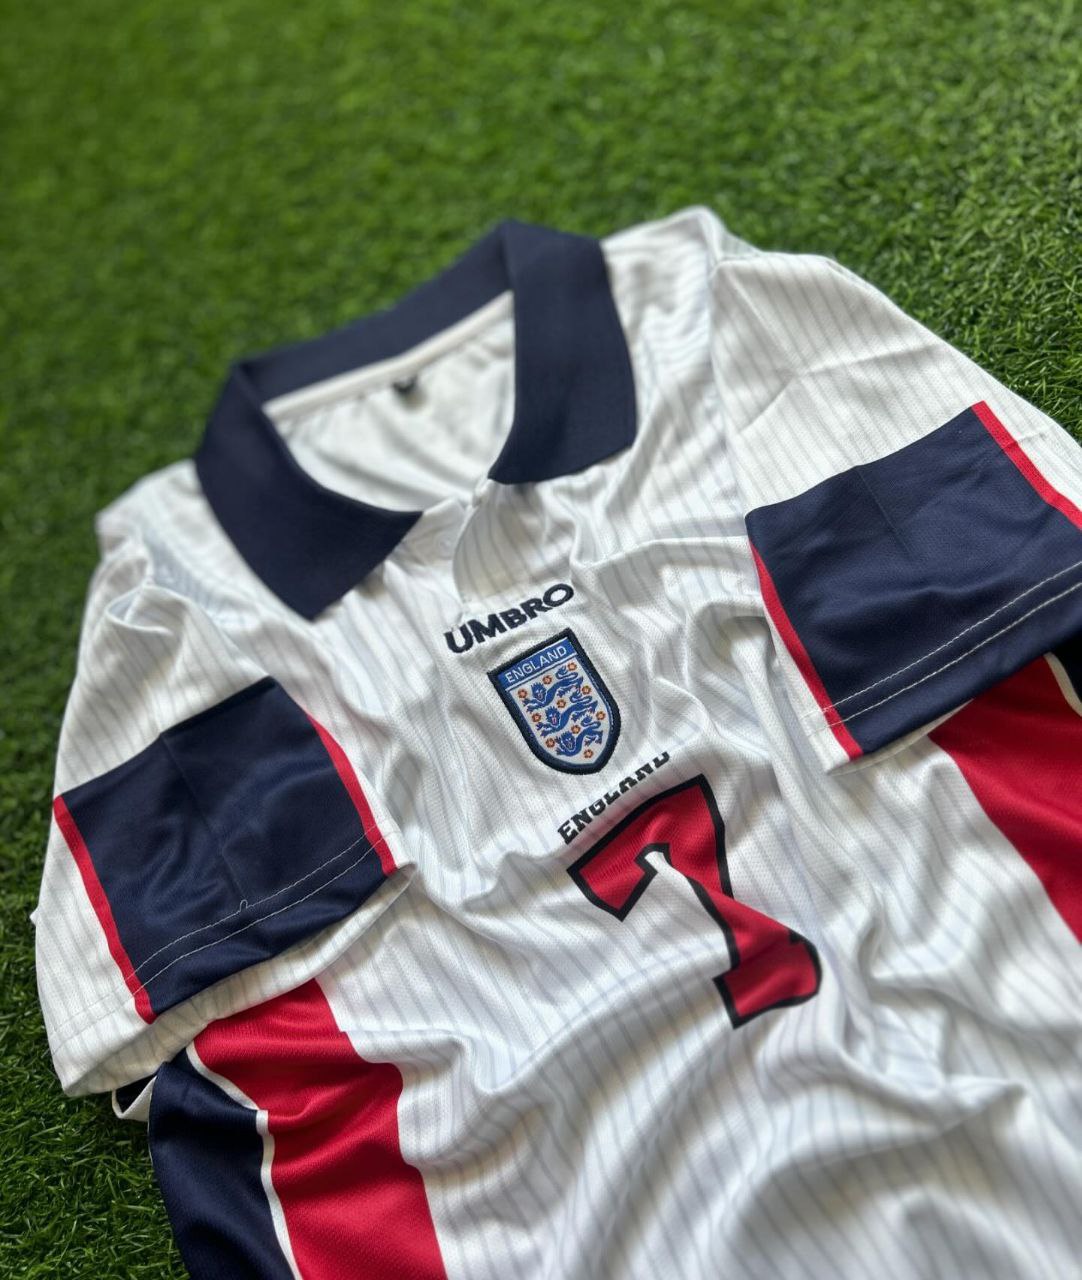 David Beckham England Red And White Retro Jersey